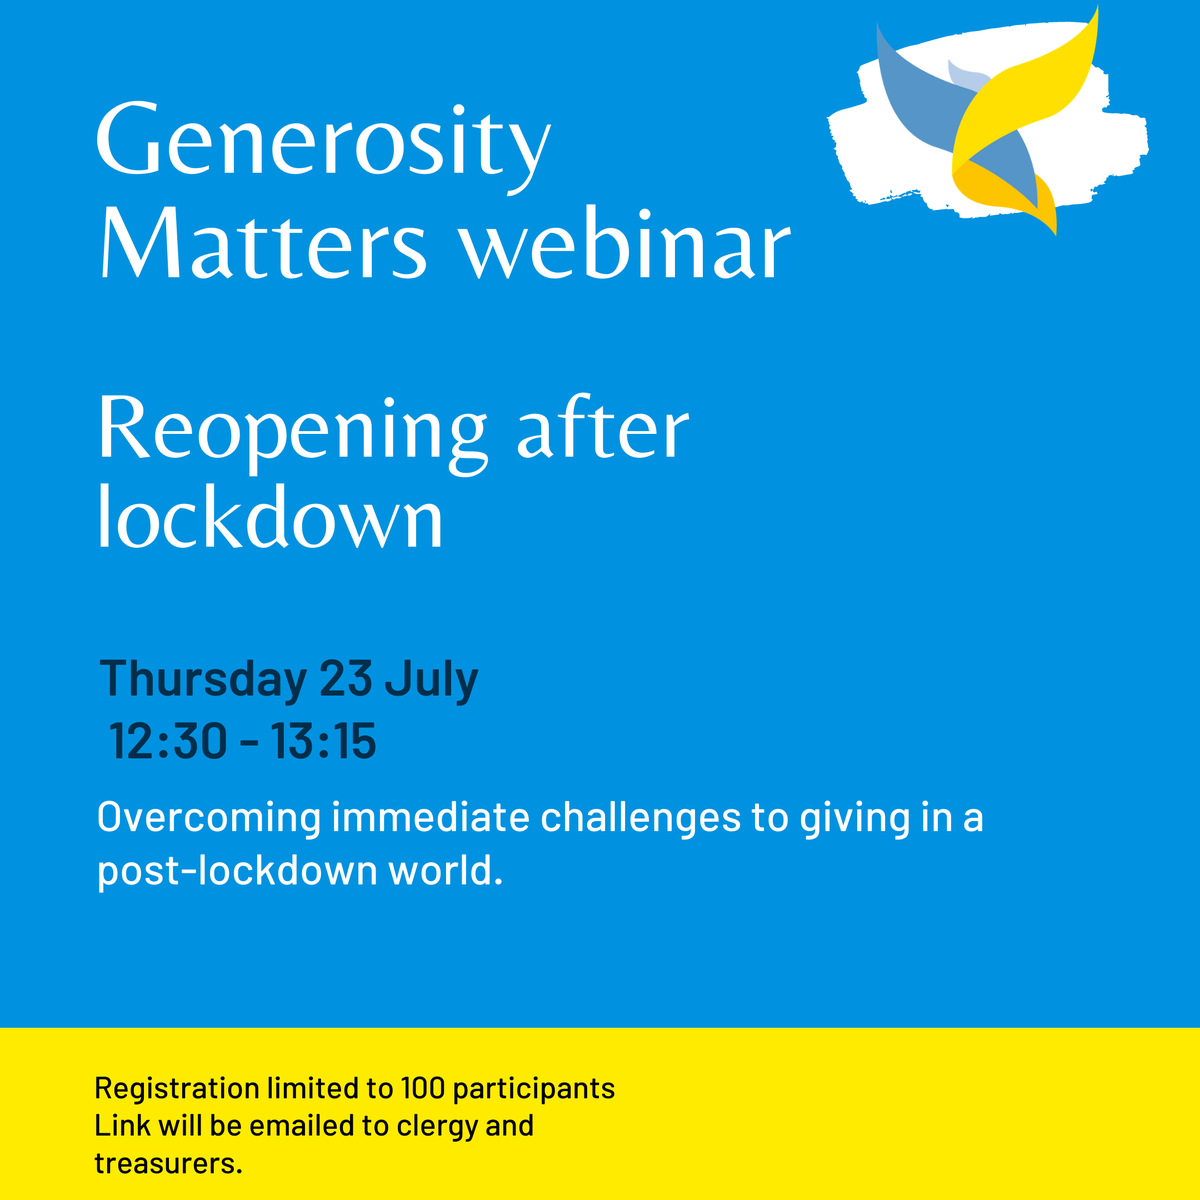 Generosity Matters webinar: Reopening after lockdown